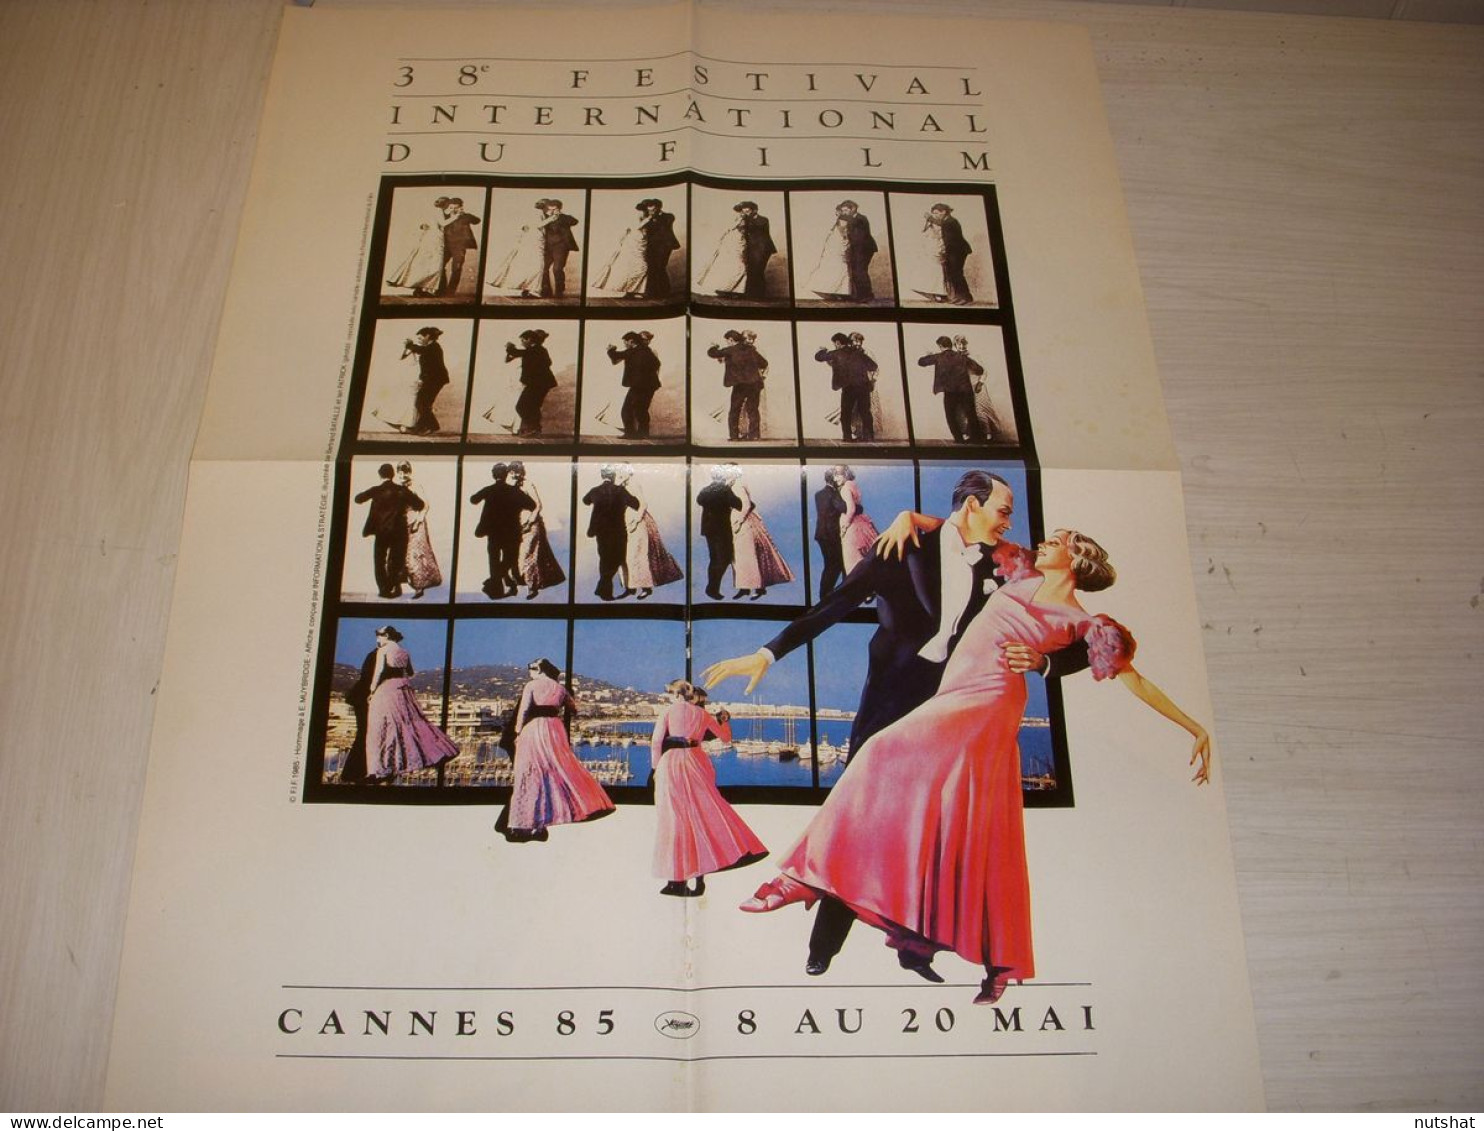 CINEMA PREMIERE 099 06.1985 SPECIAL CANNES Gerard DEPARDIEU S. WEAVER MASK CHER  - Kino